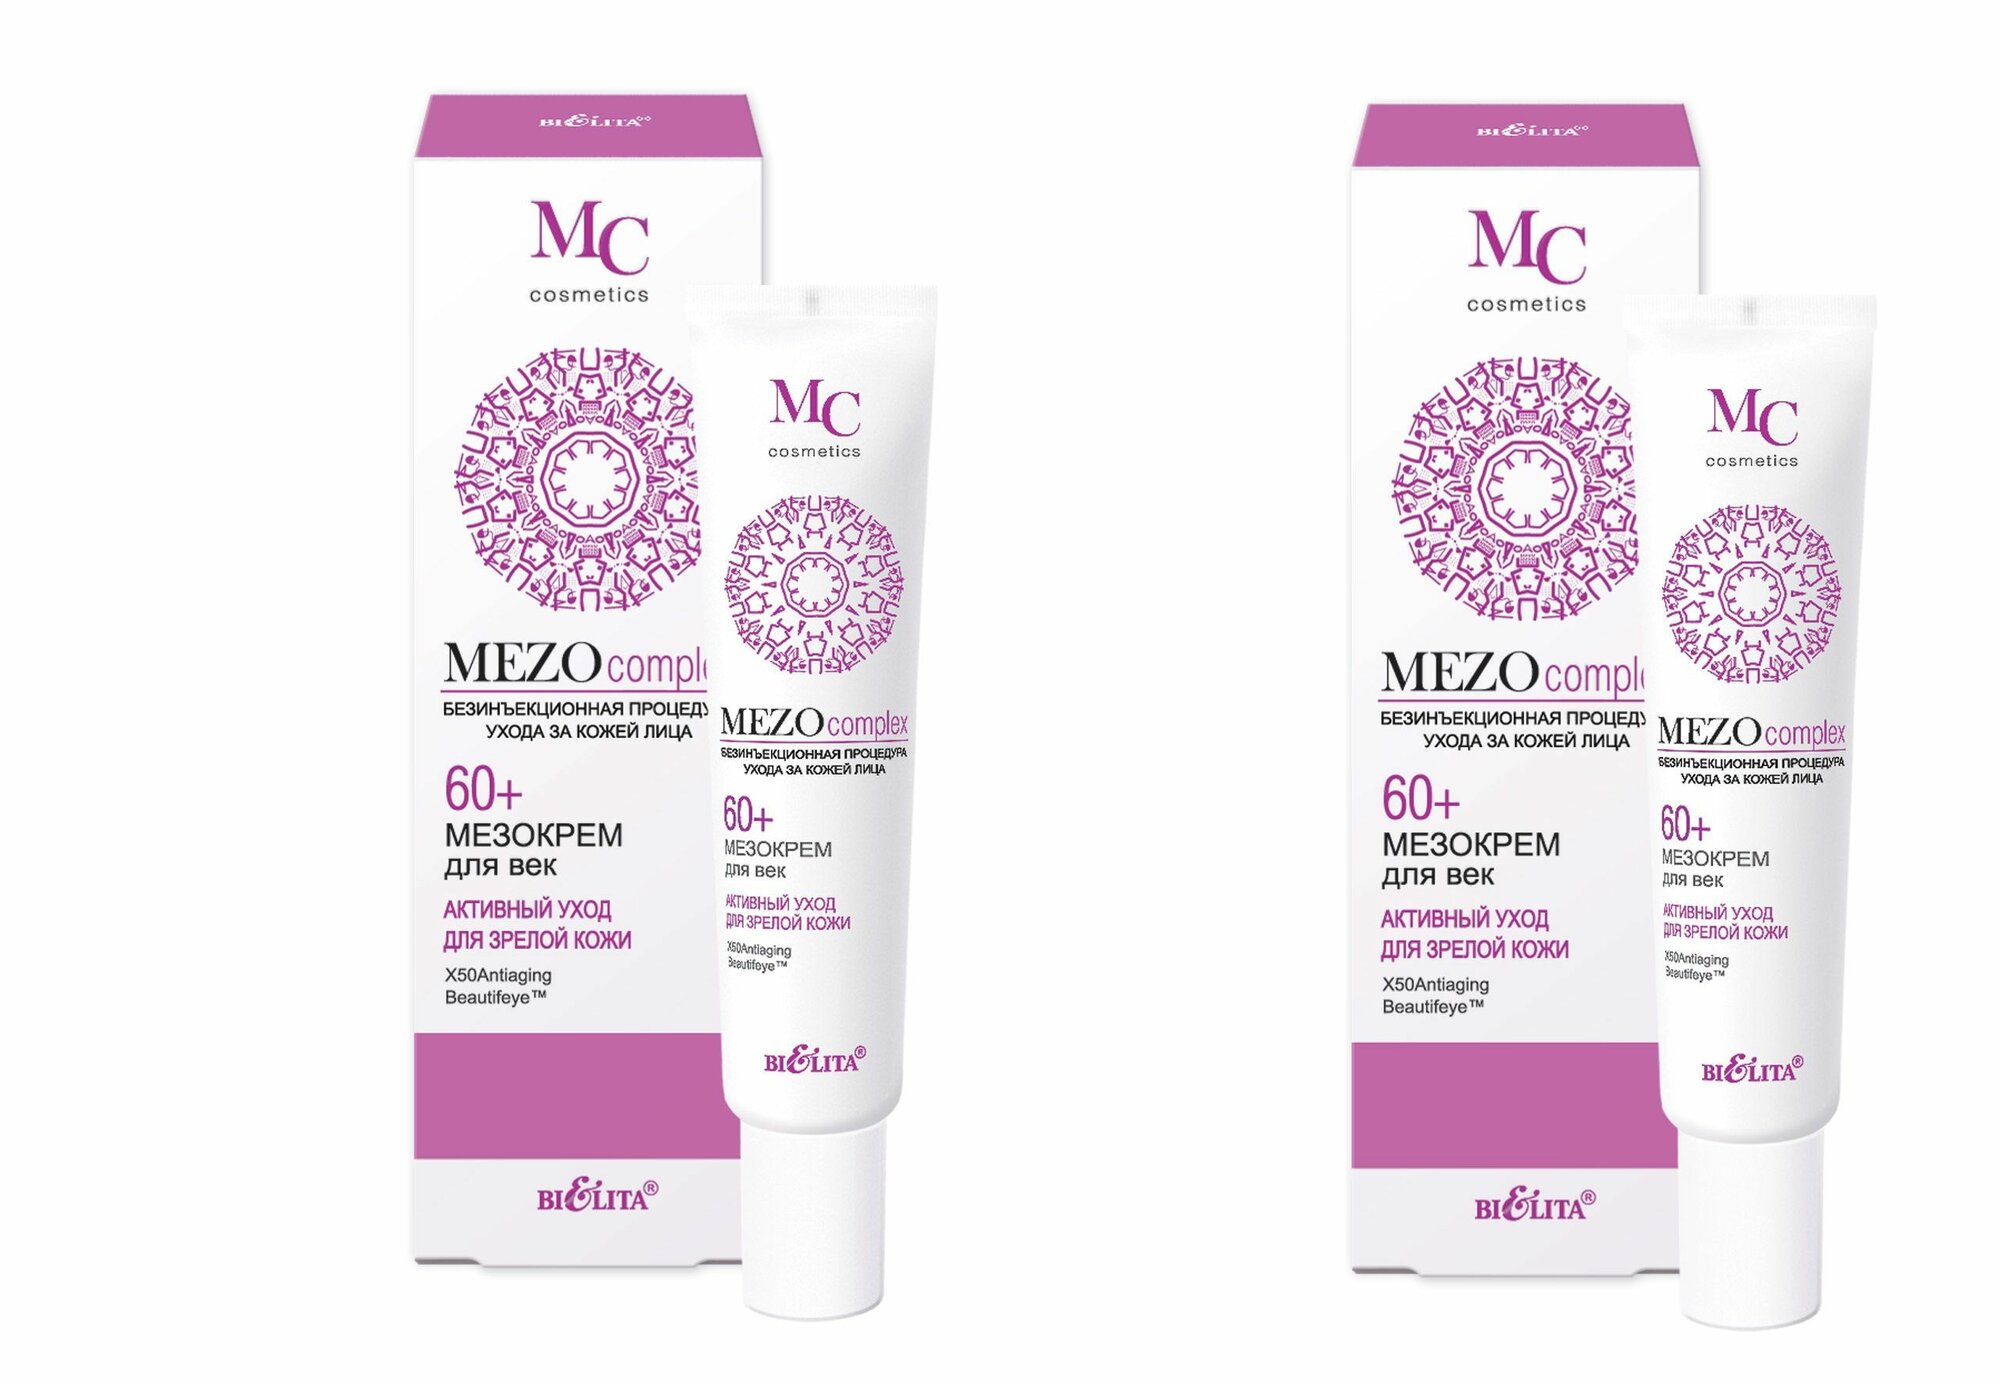 Белита Мезокрем для век 60+ MEZOcomplex Активный уход для зрелой кожи, 20 мл, 2 шт